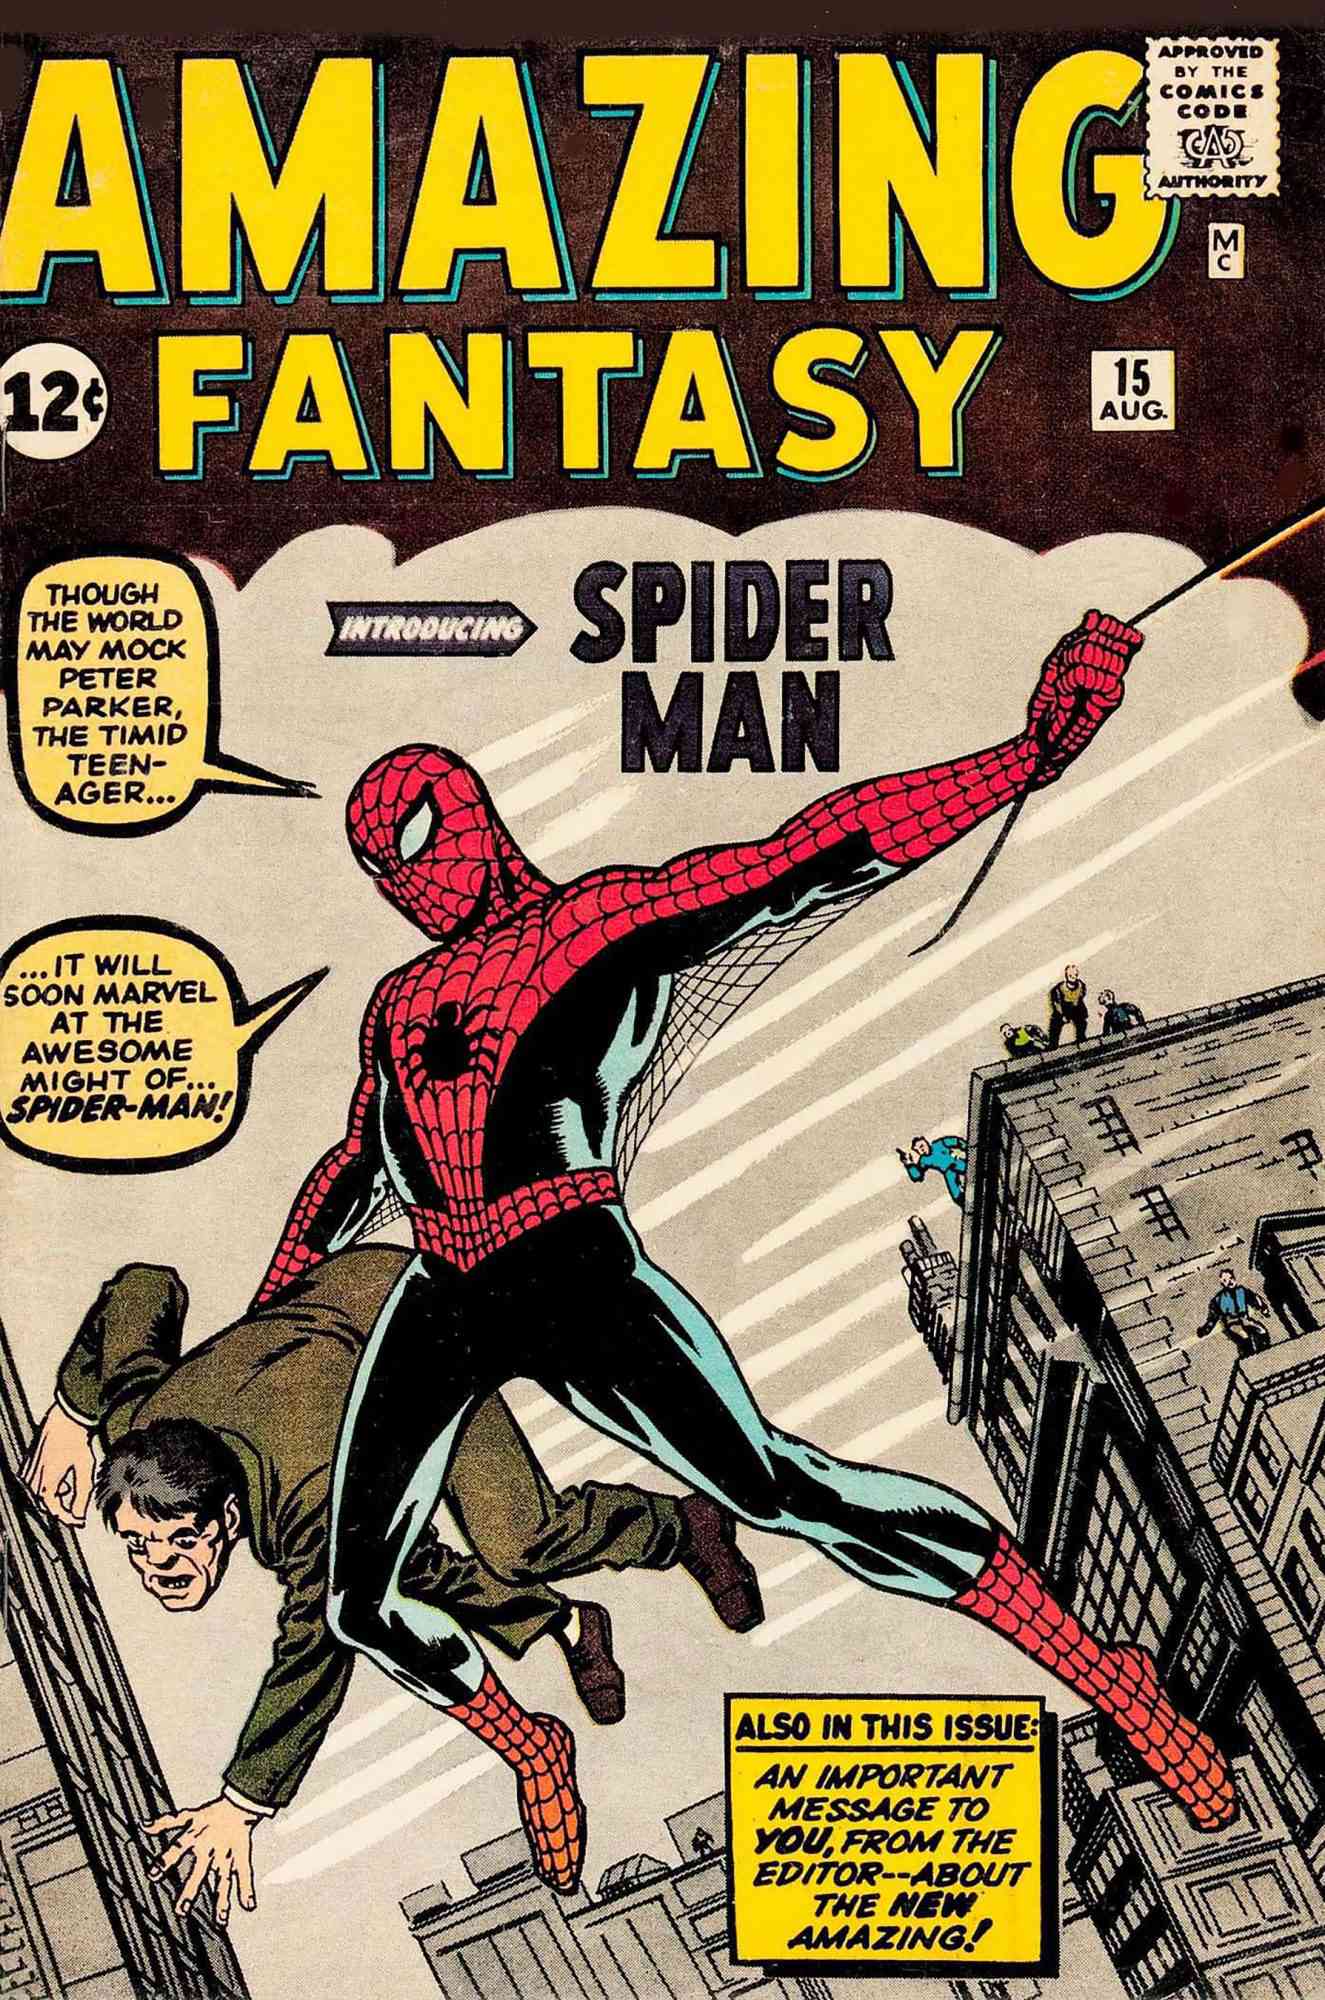 Amazing Fantasy #15Artist: Jack Kirby, 1962